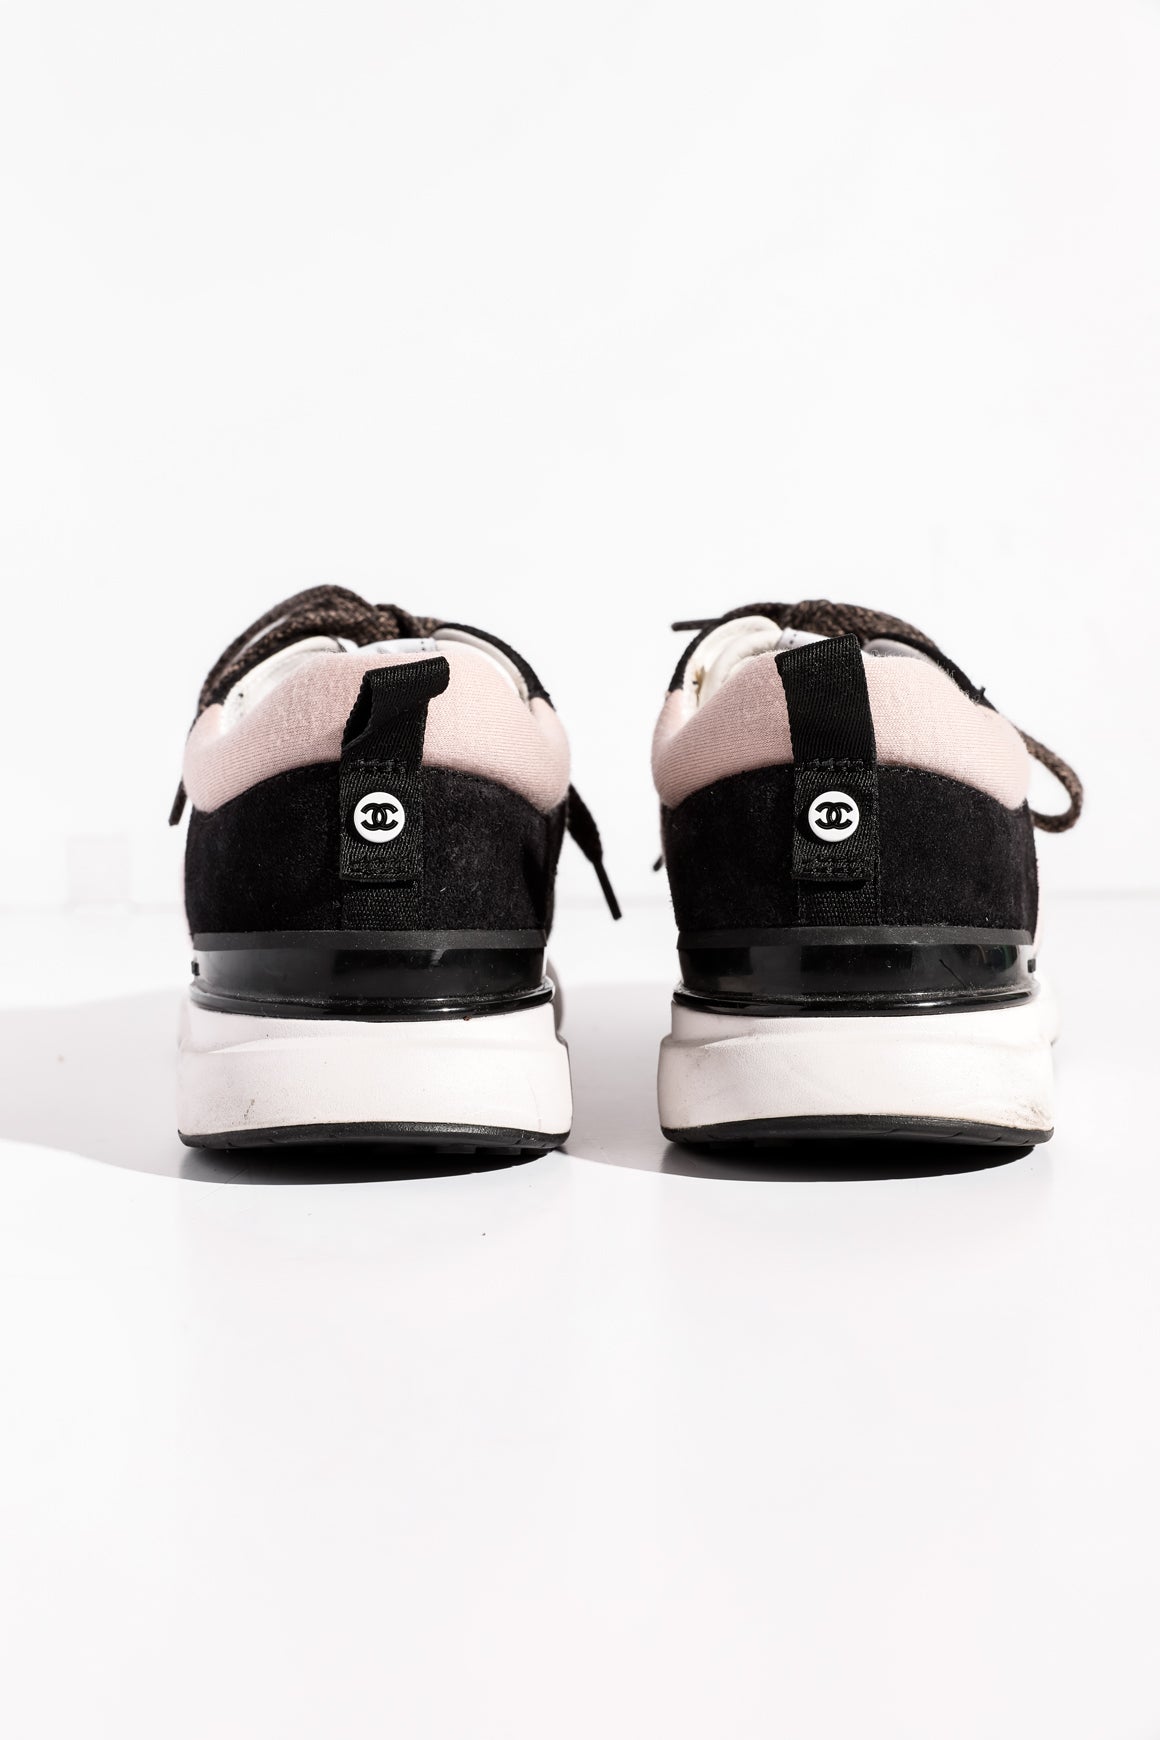 CHANEL Pink & Black Sneakers (Sz. 40)